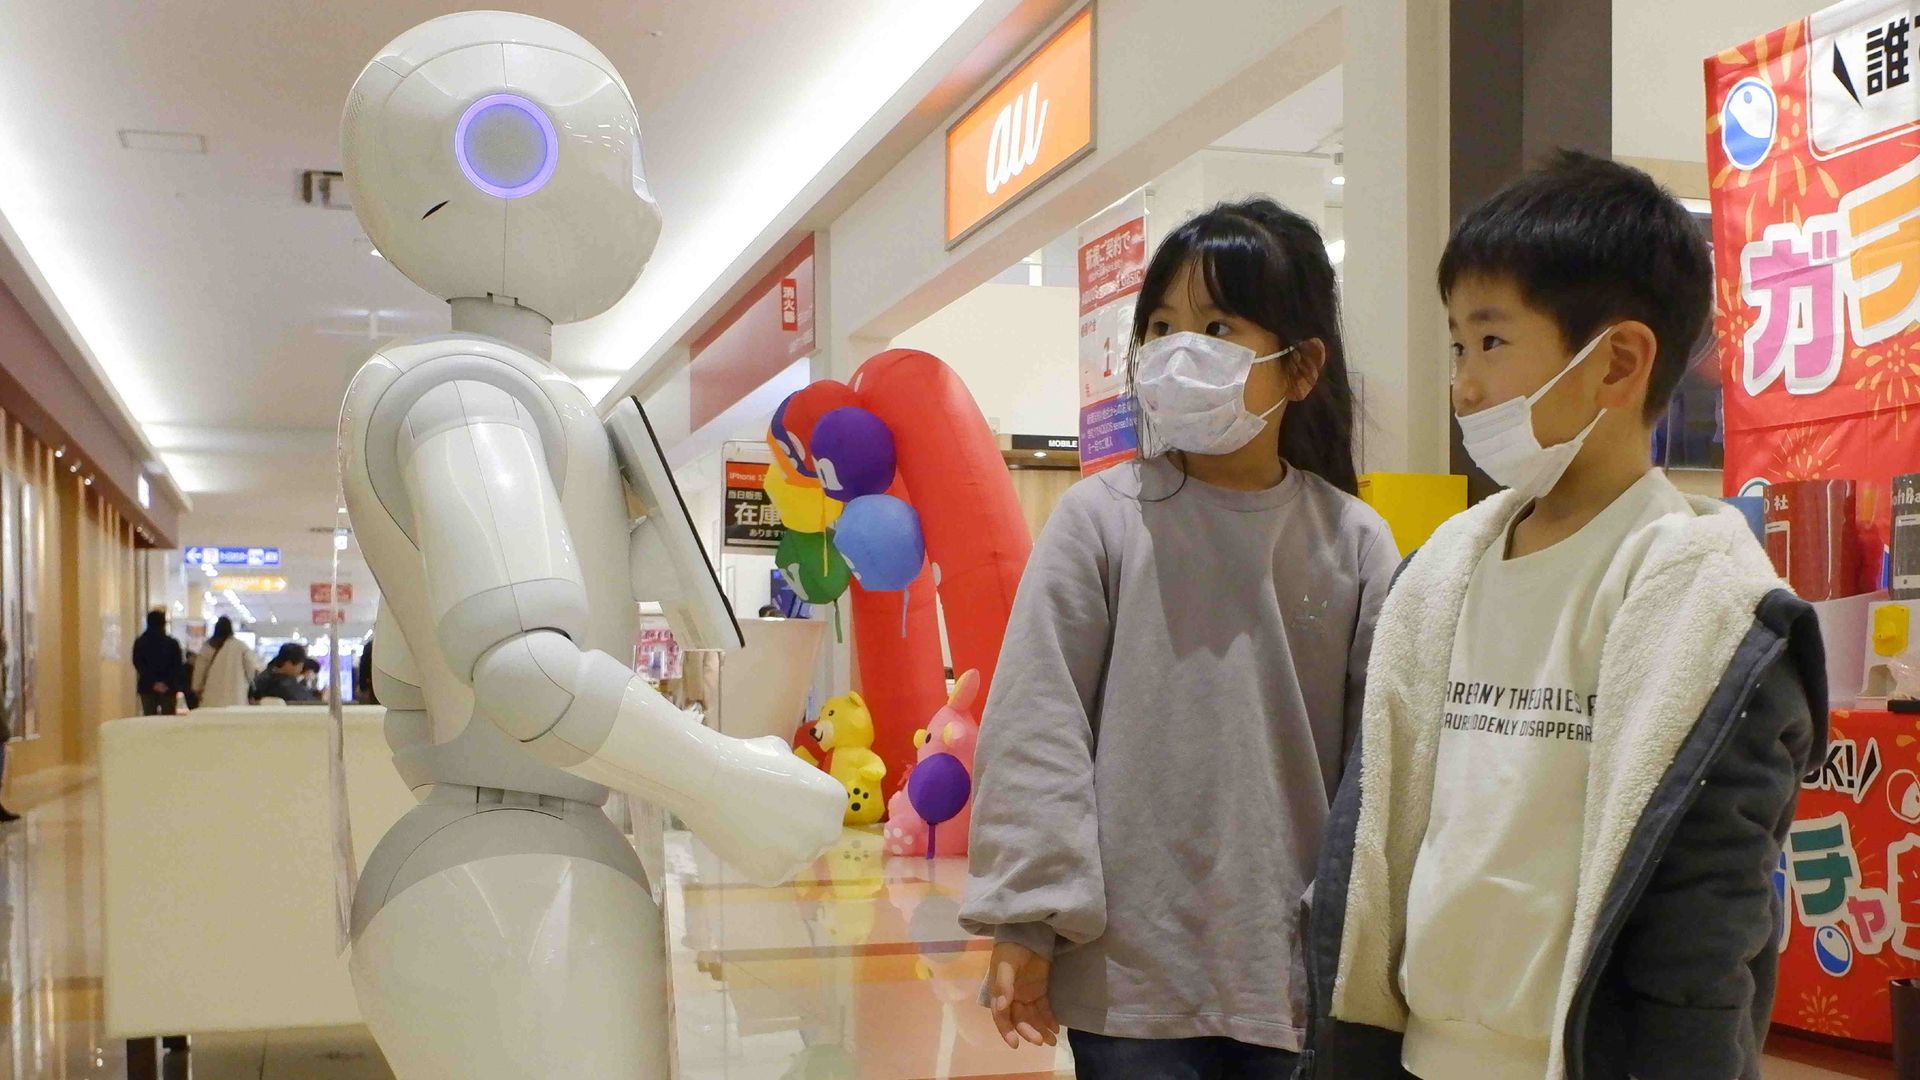 Children in a Tokyo shopping center encounter Pepper, a semi-humanoid robot. 